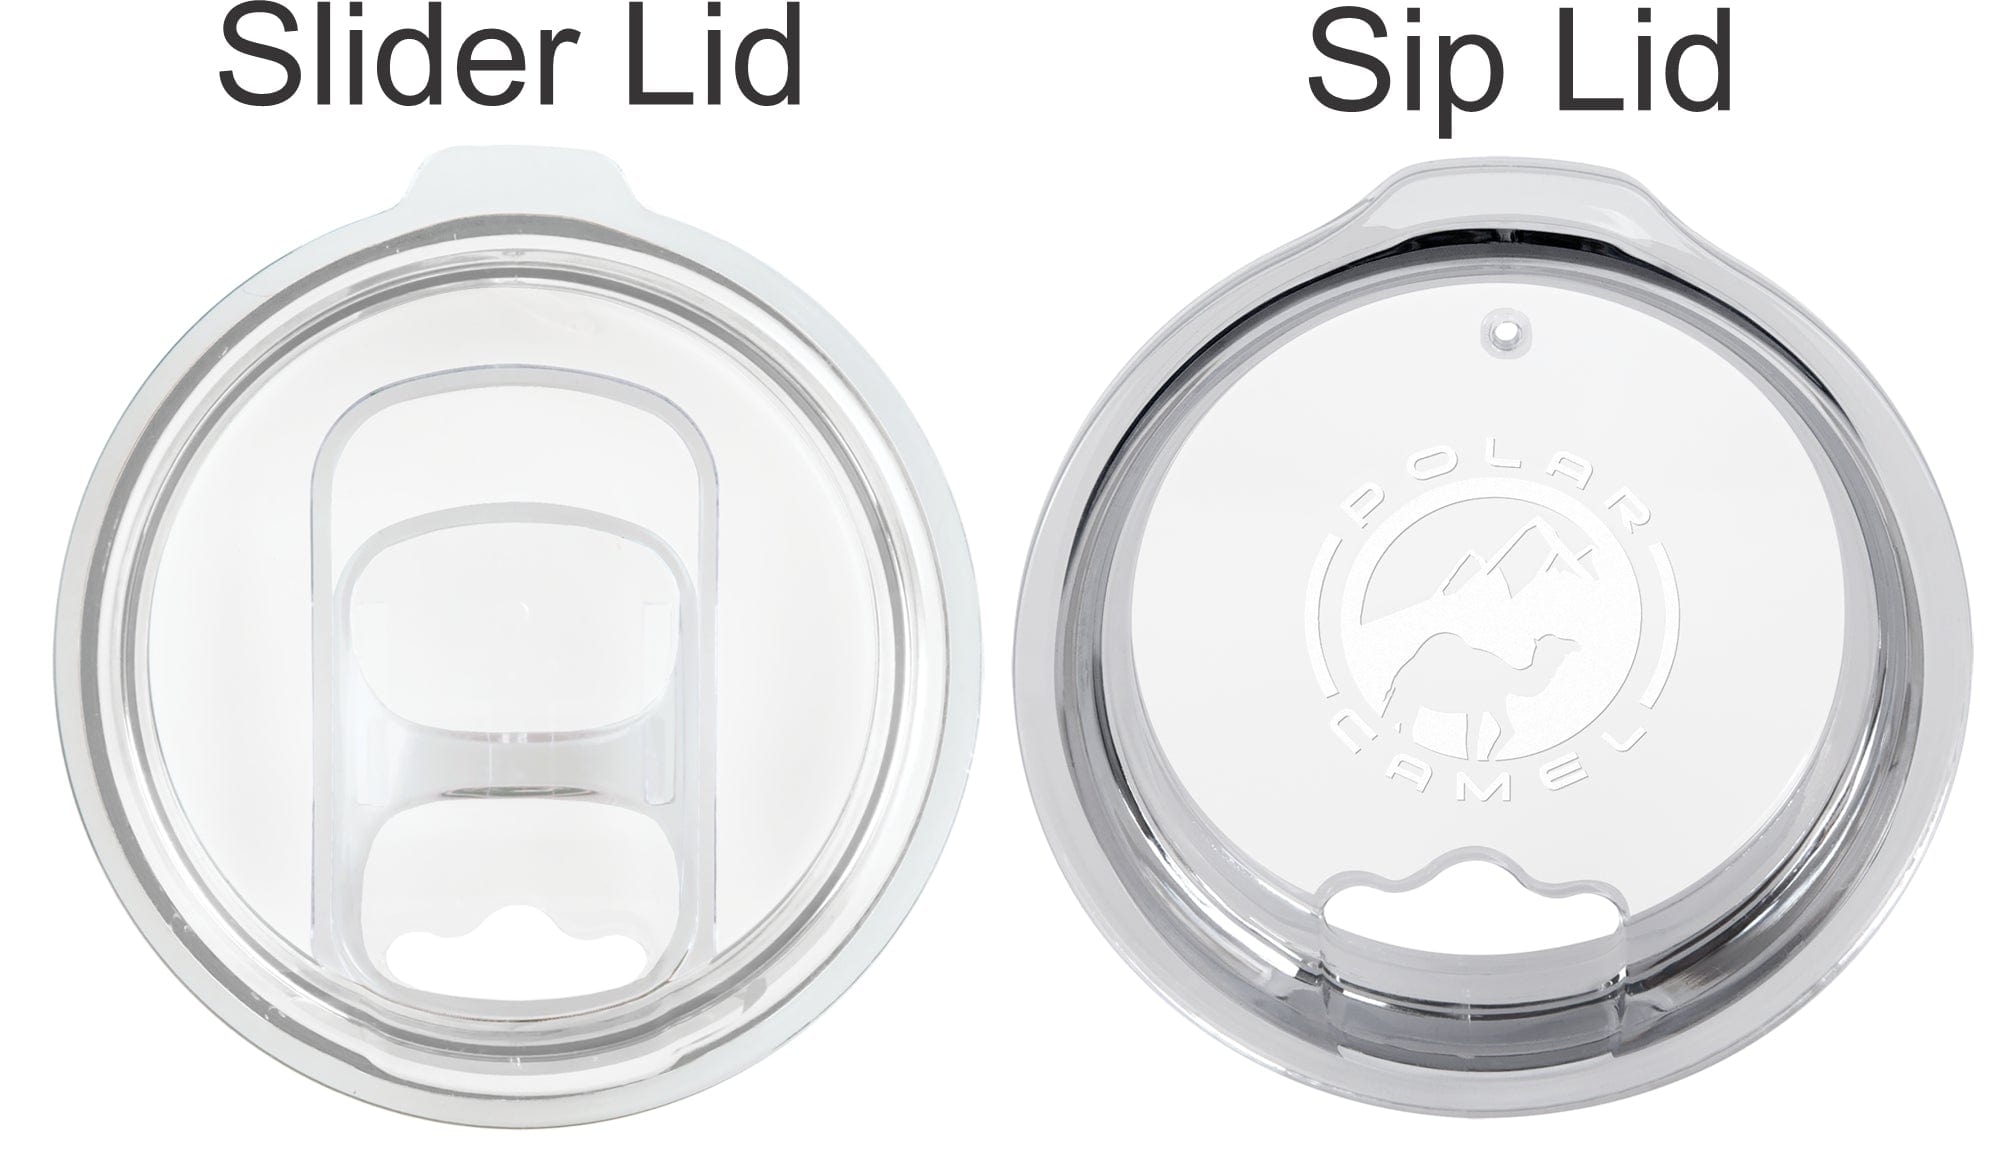 lid options for wine tumblers - sip or slider lid